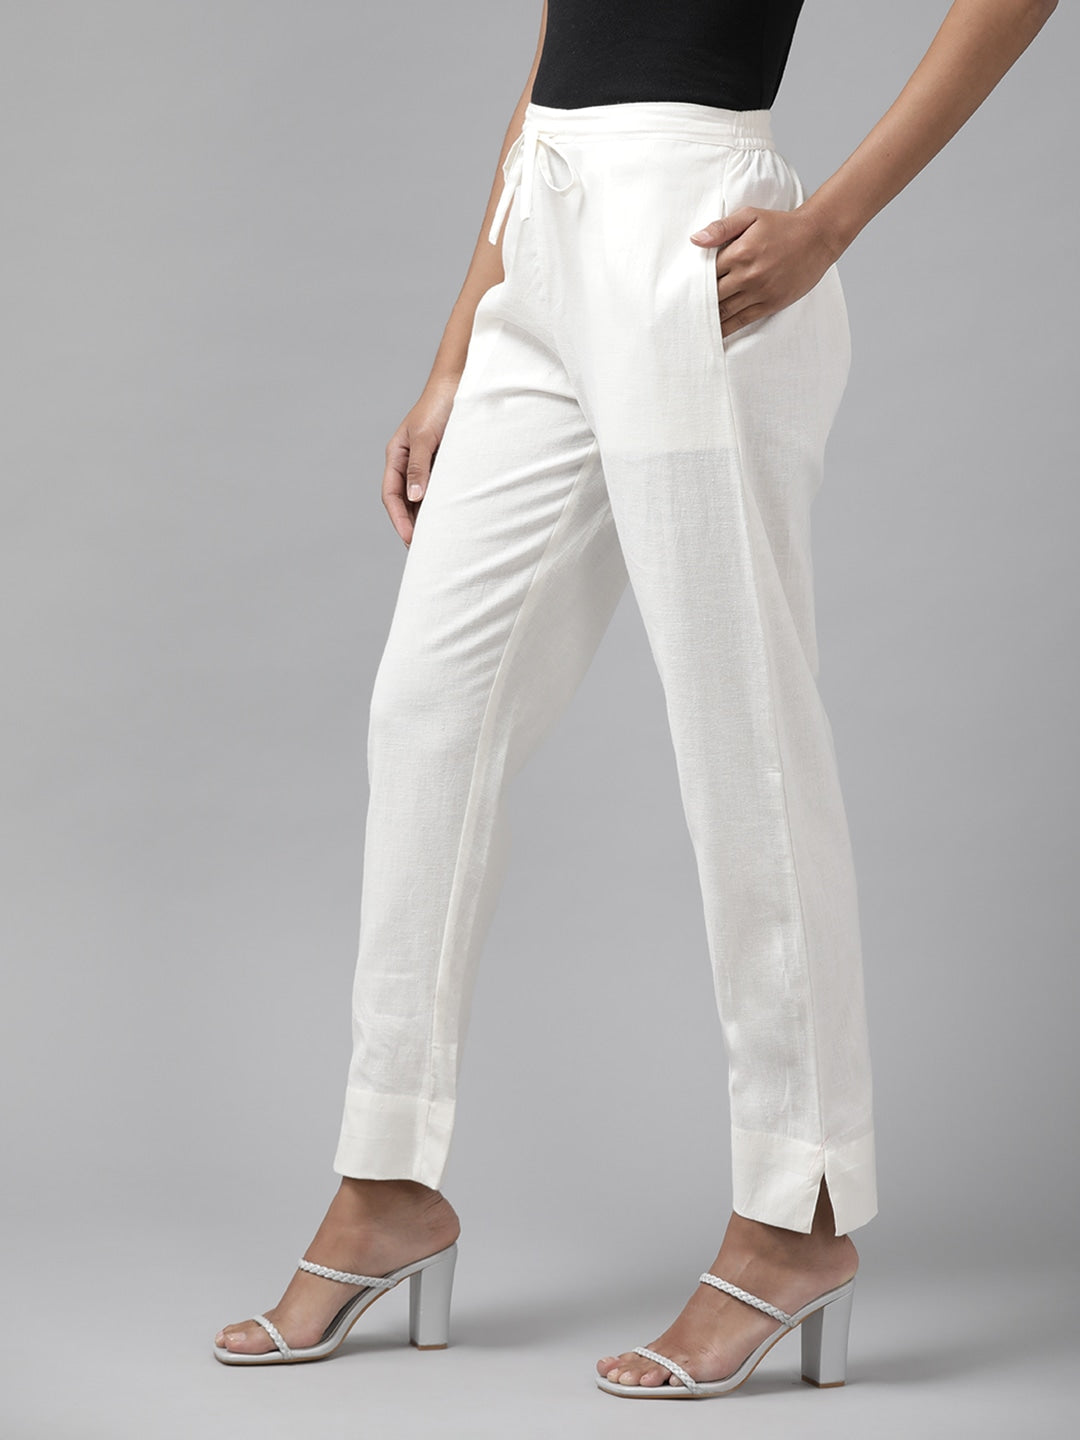 White Cotton Fit Trousers-Yufta Store-4206PNTWHS